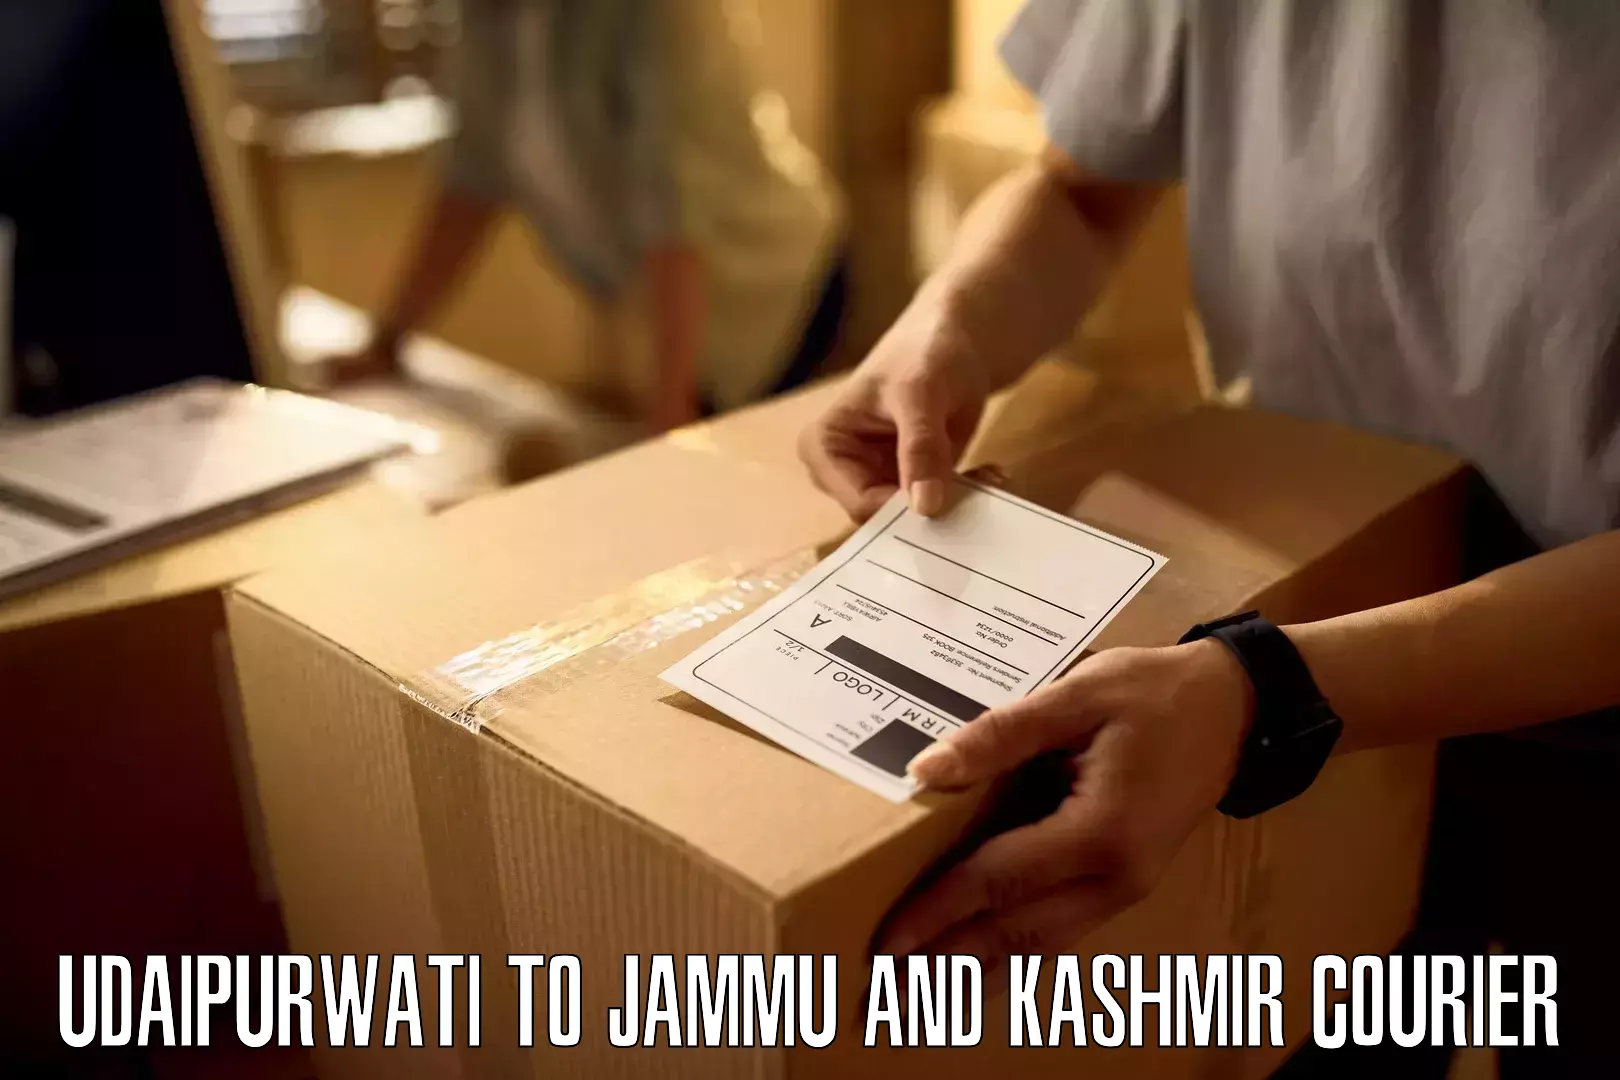 Professional courier handling Udaipurwati to IIT Jammu